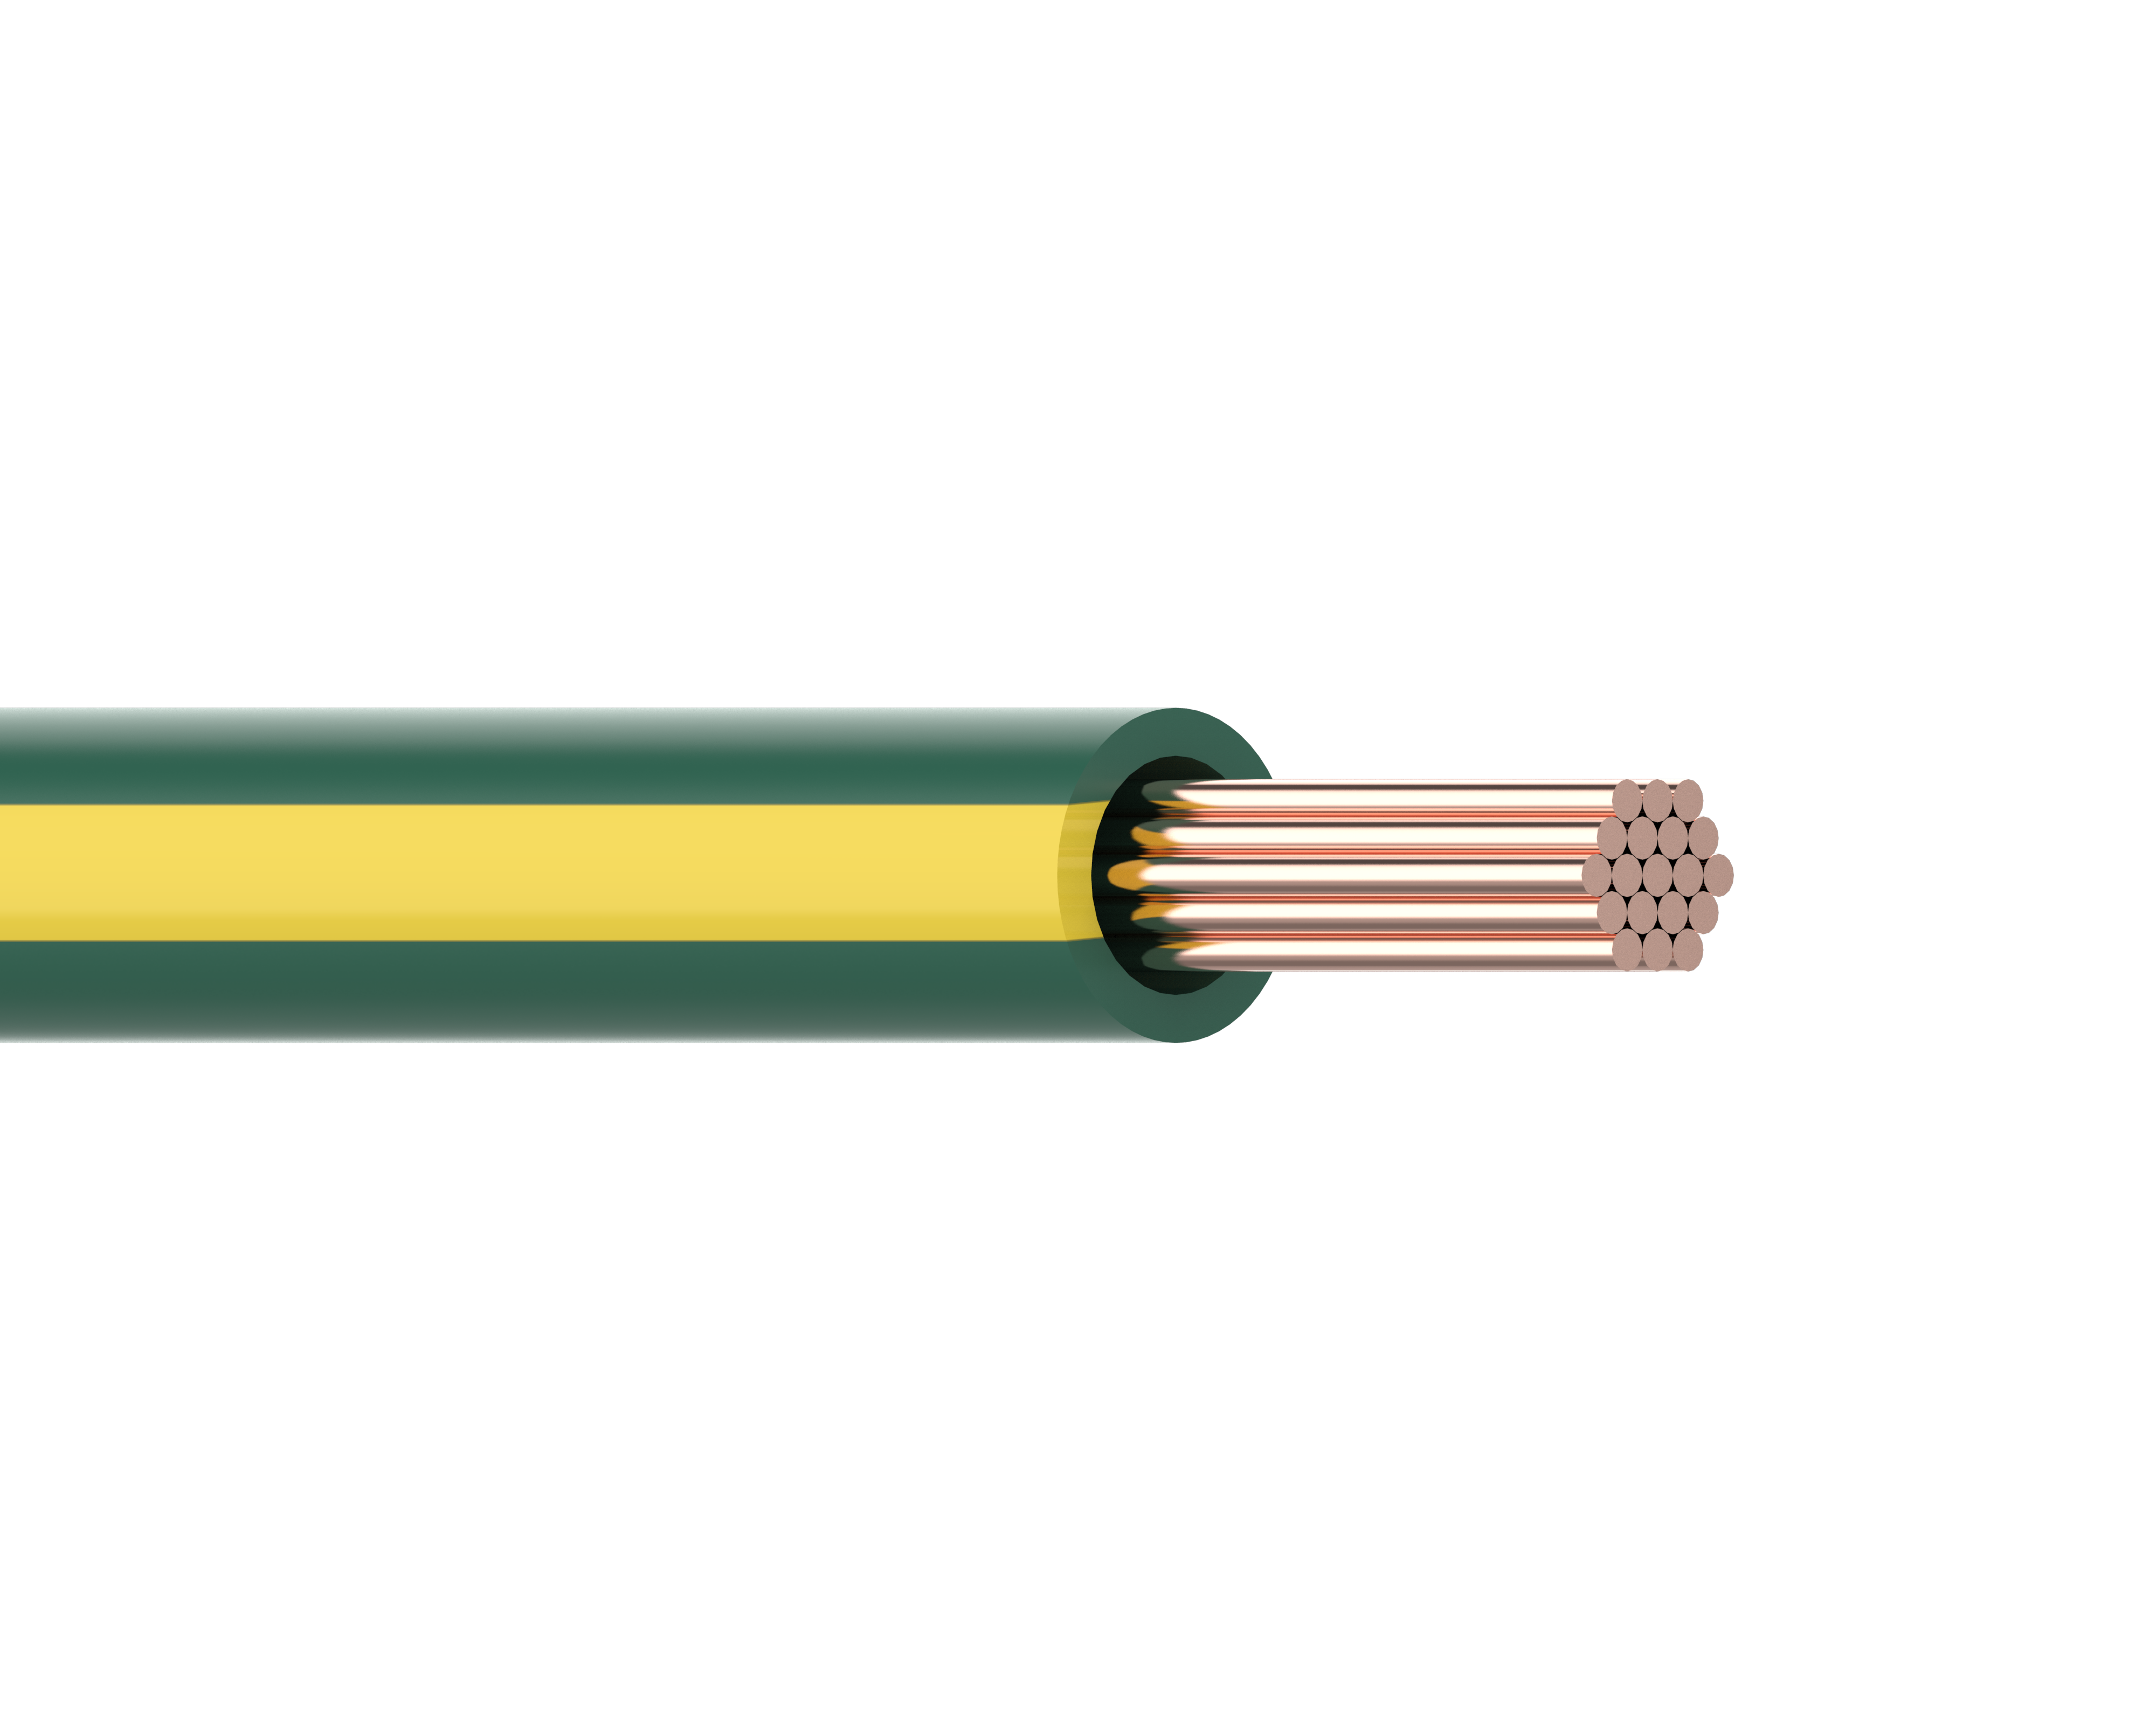 Primary wires V1 綠色+黃色條紋